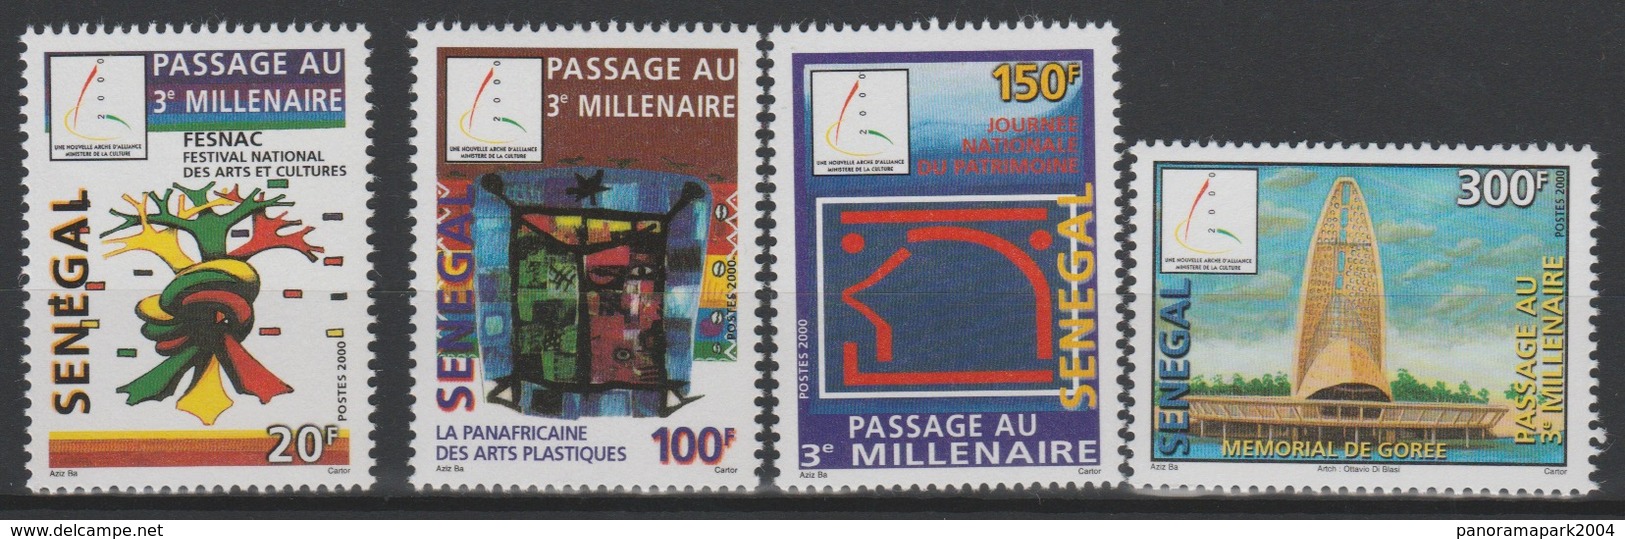 Sénégal 2001 Mi. 1920 - 1923 FESNAC Passage Au 3e Millénaire Jahrtausendwende 3rd Millenary - Sénégal (1960-...)